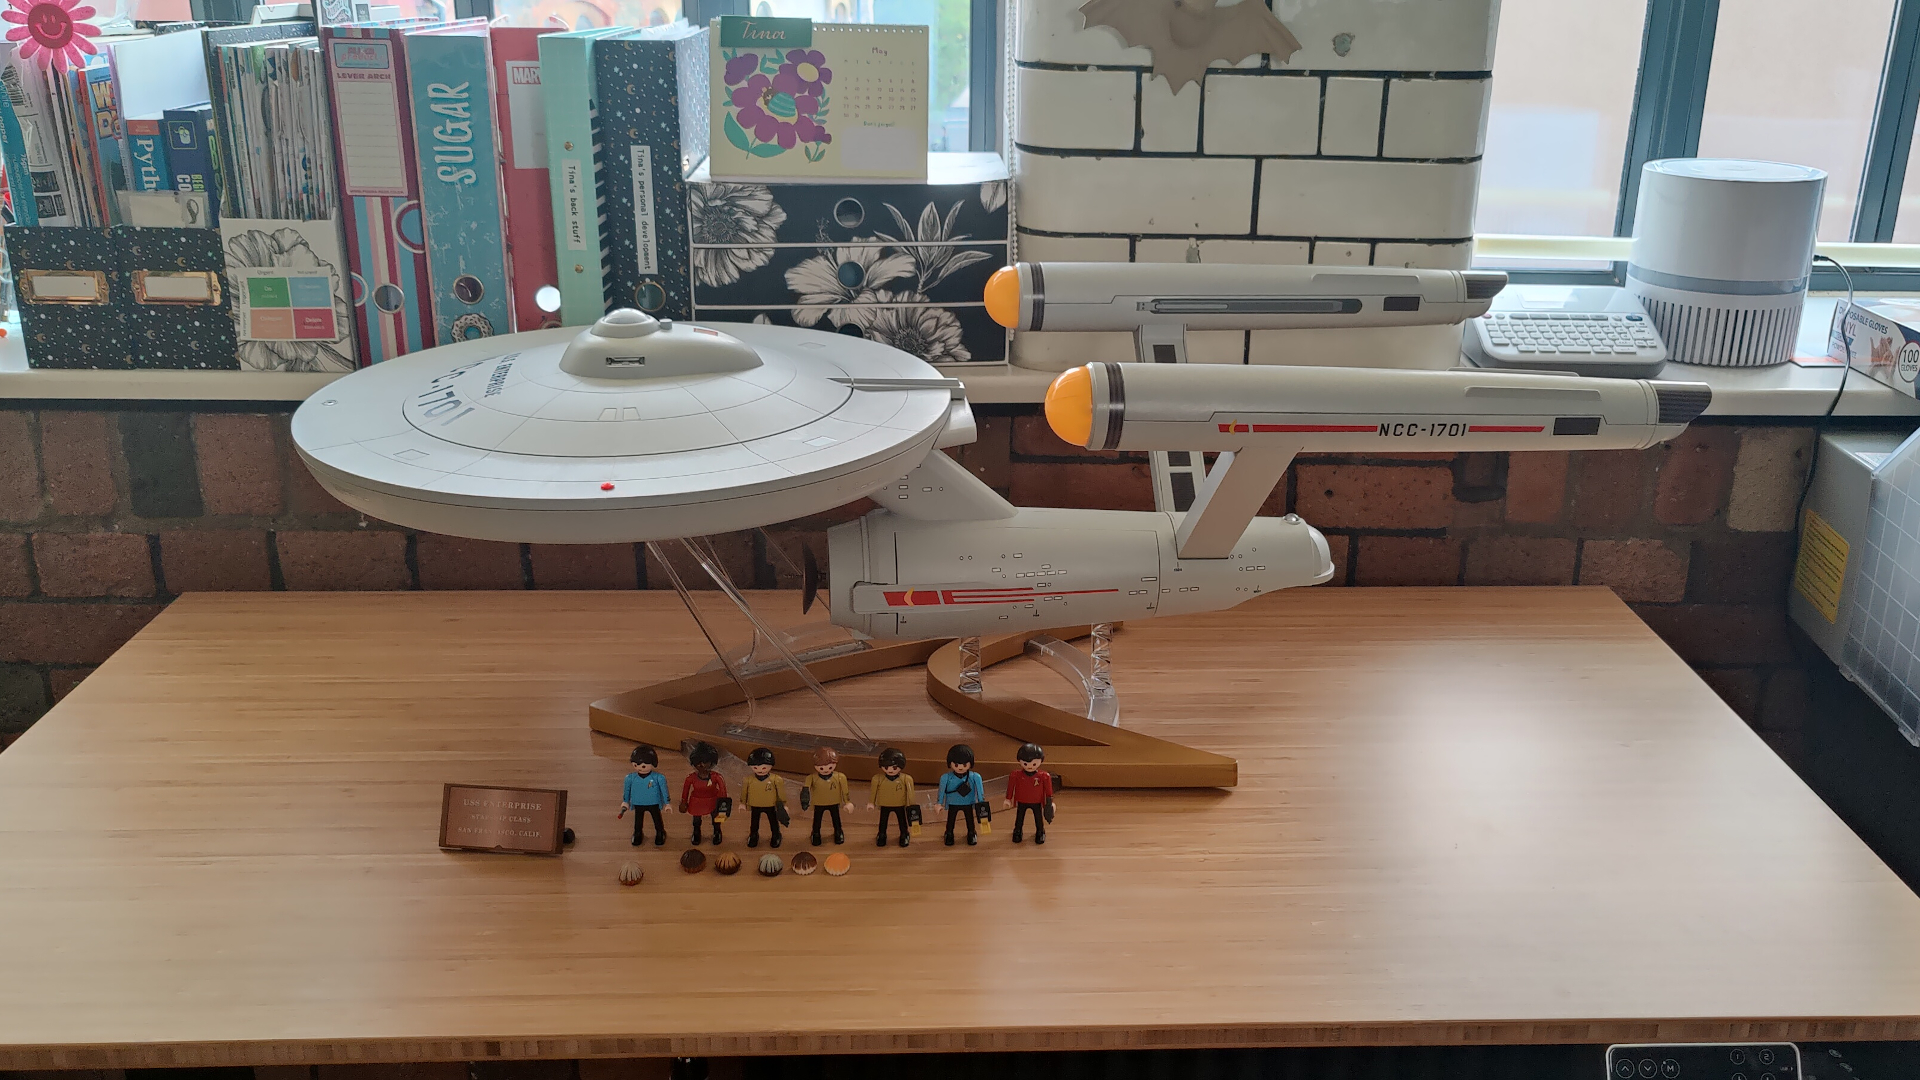 Playmobil Star Trek TOS USS Enterprise review